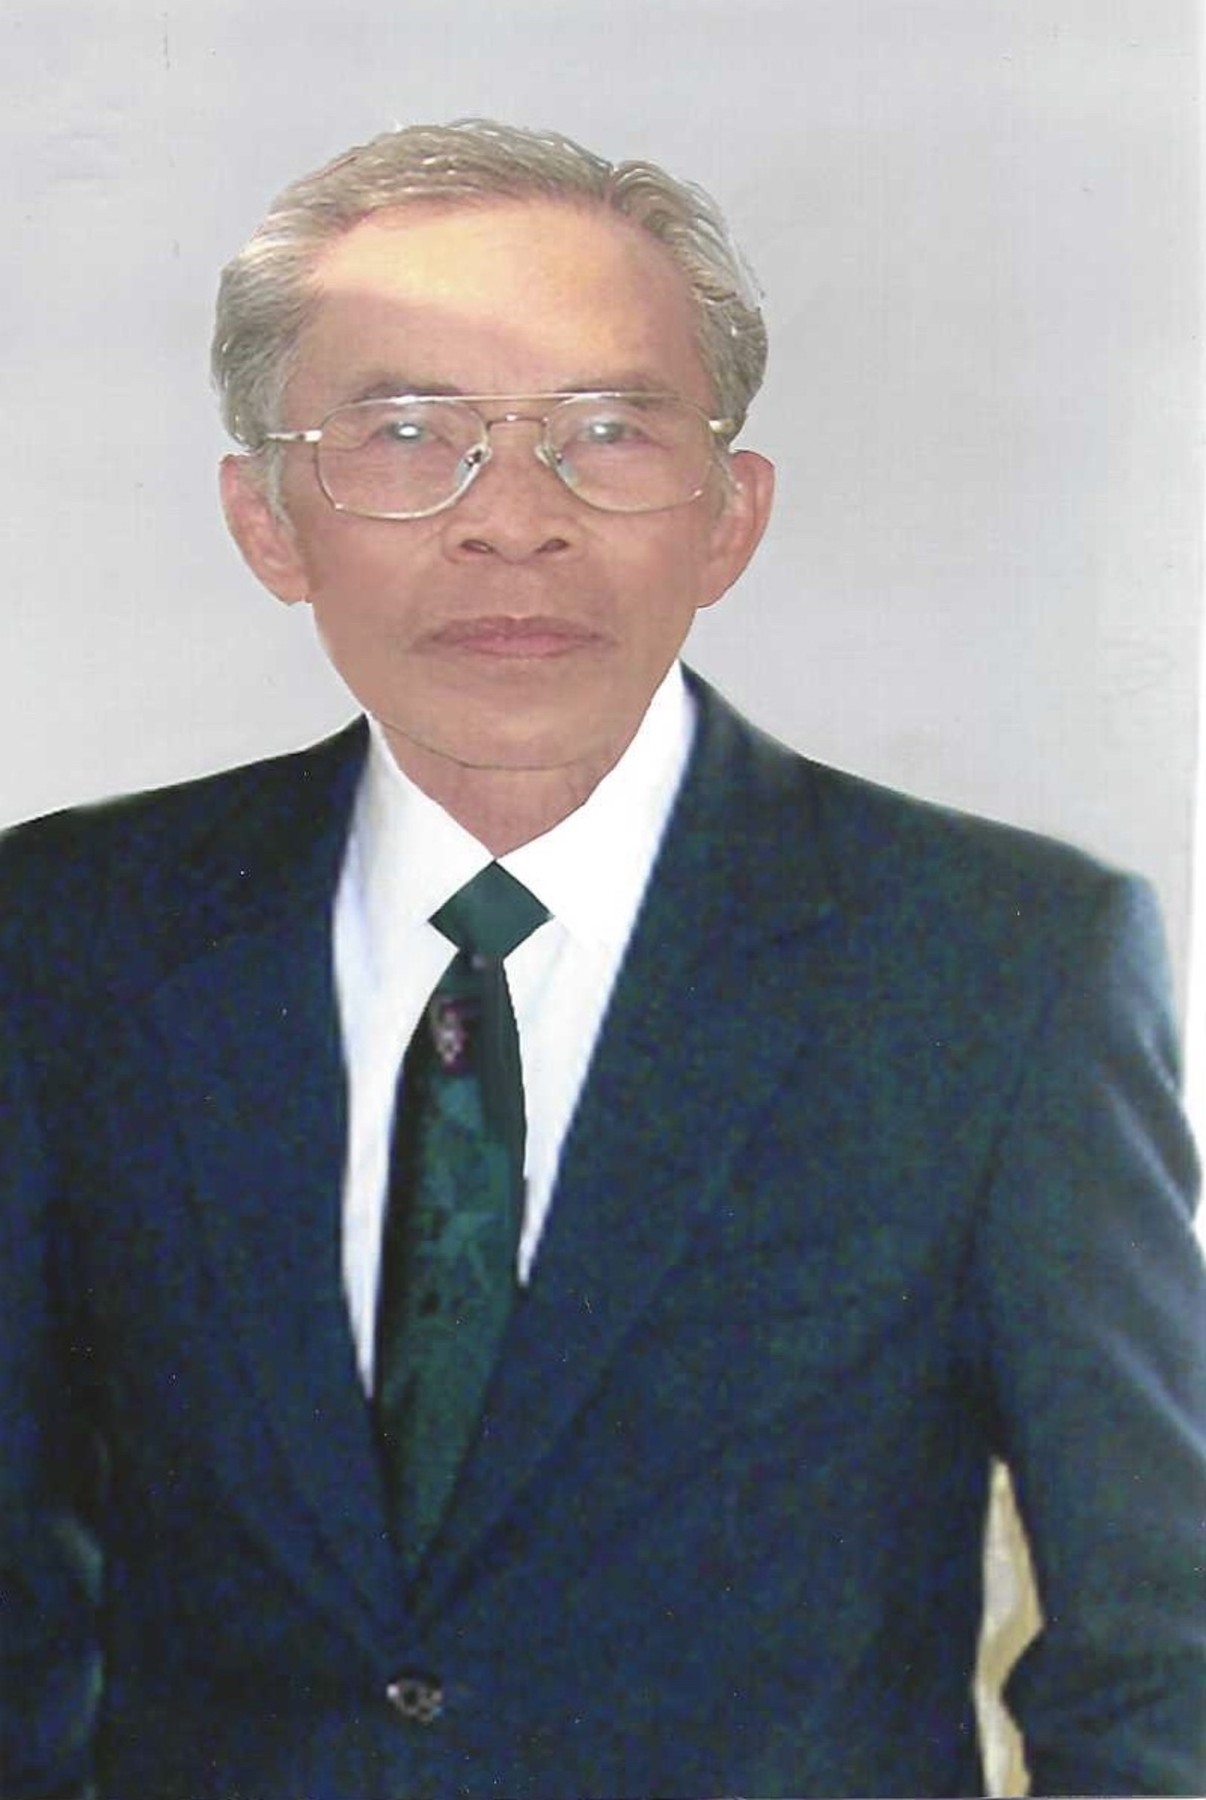 Obituary of Phêrô Mai Anh Nở - 08/02/2020 - From the Family